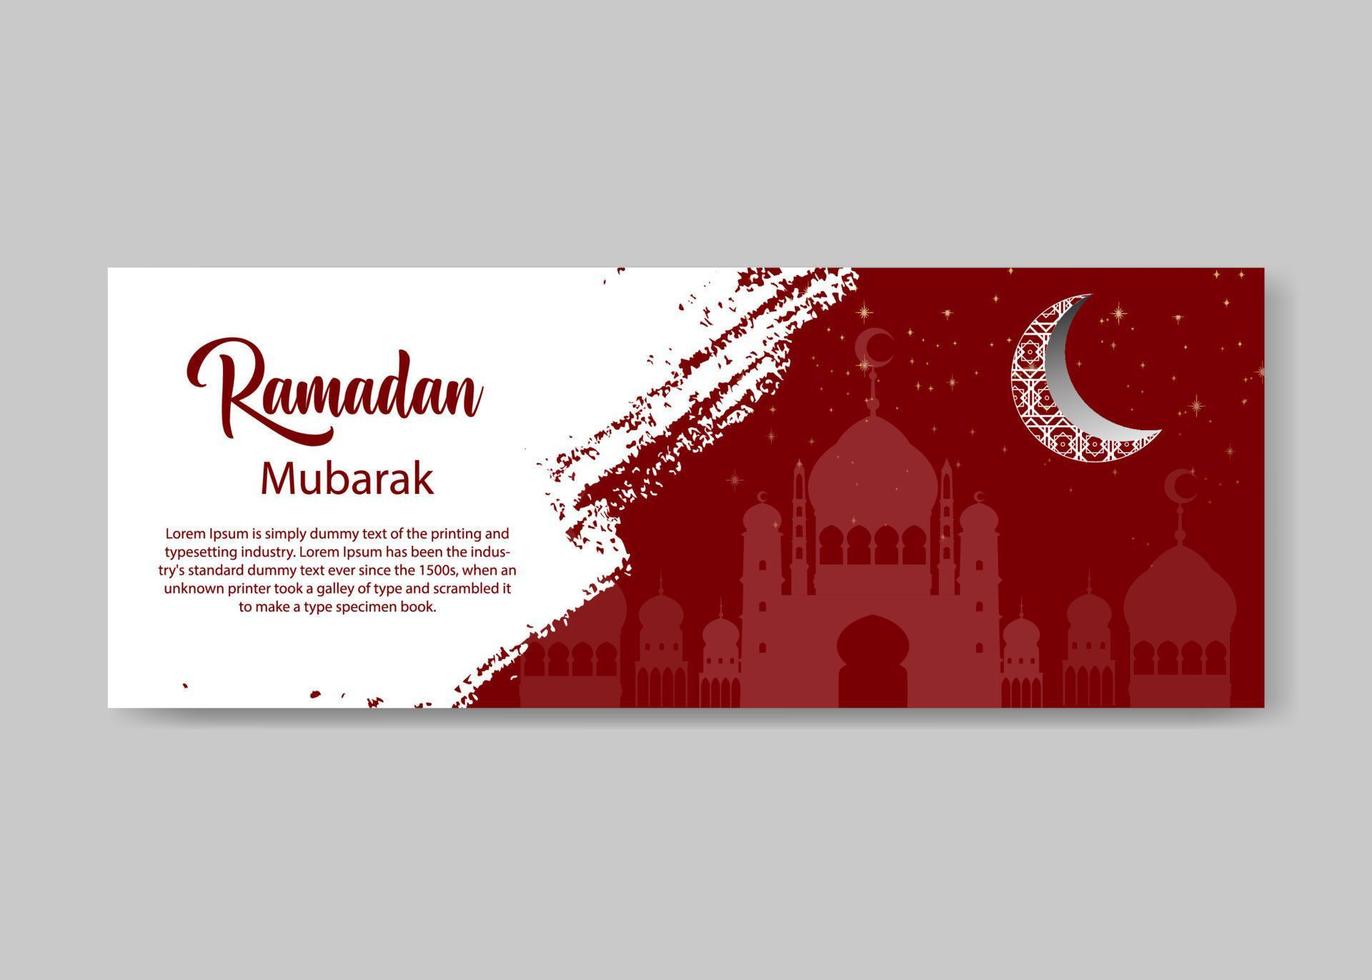 Ramadan kareem traditional islamic social media banner and cover design vector